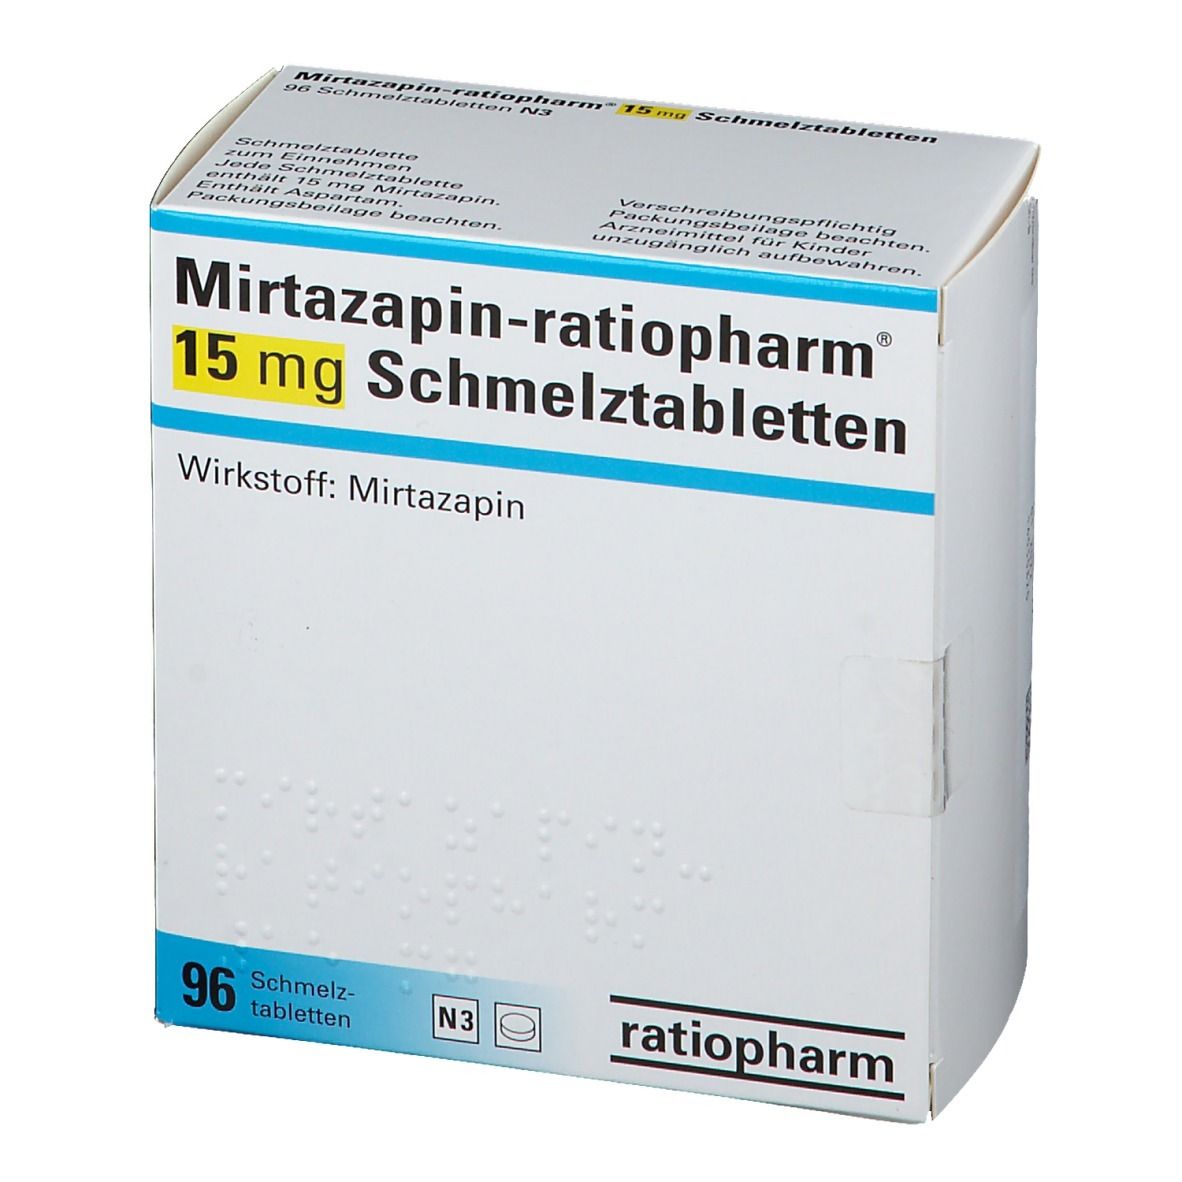 Mirtazapin-ratiopharm® 15 mg Schmelztabletten